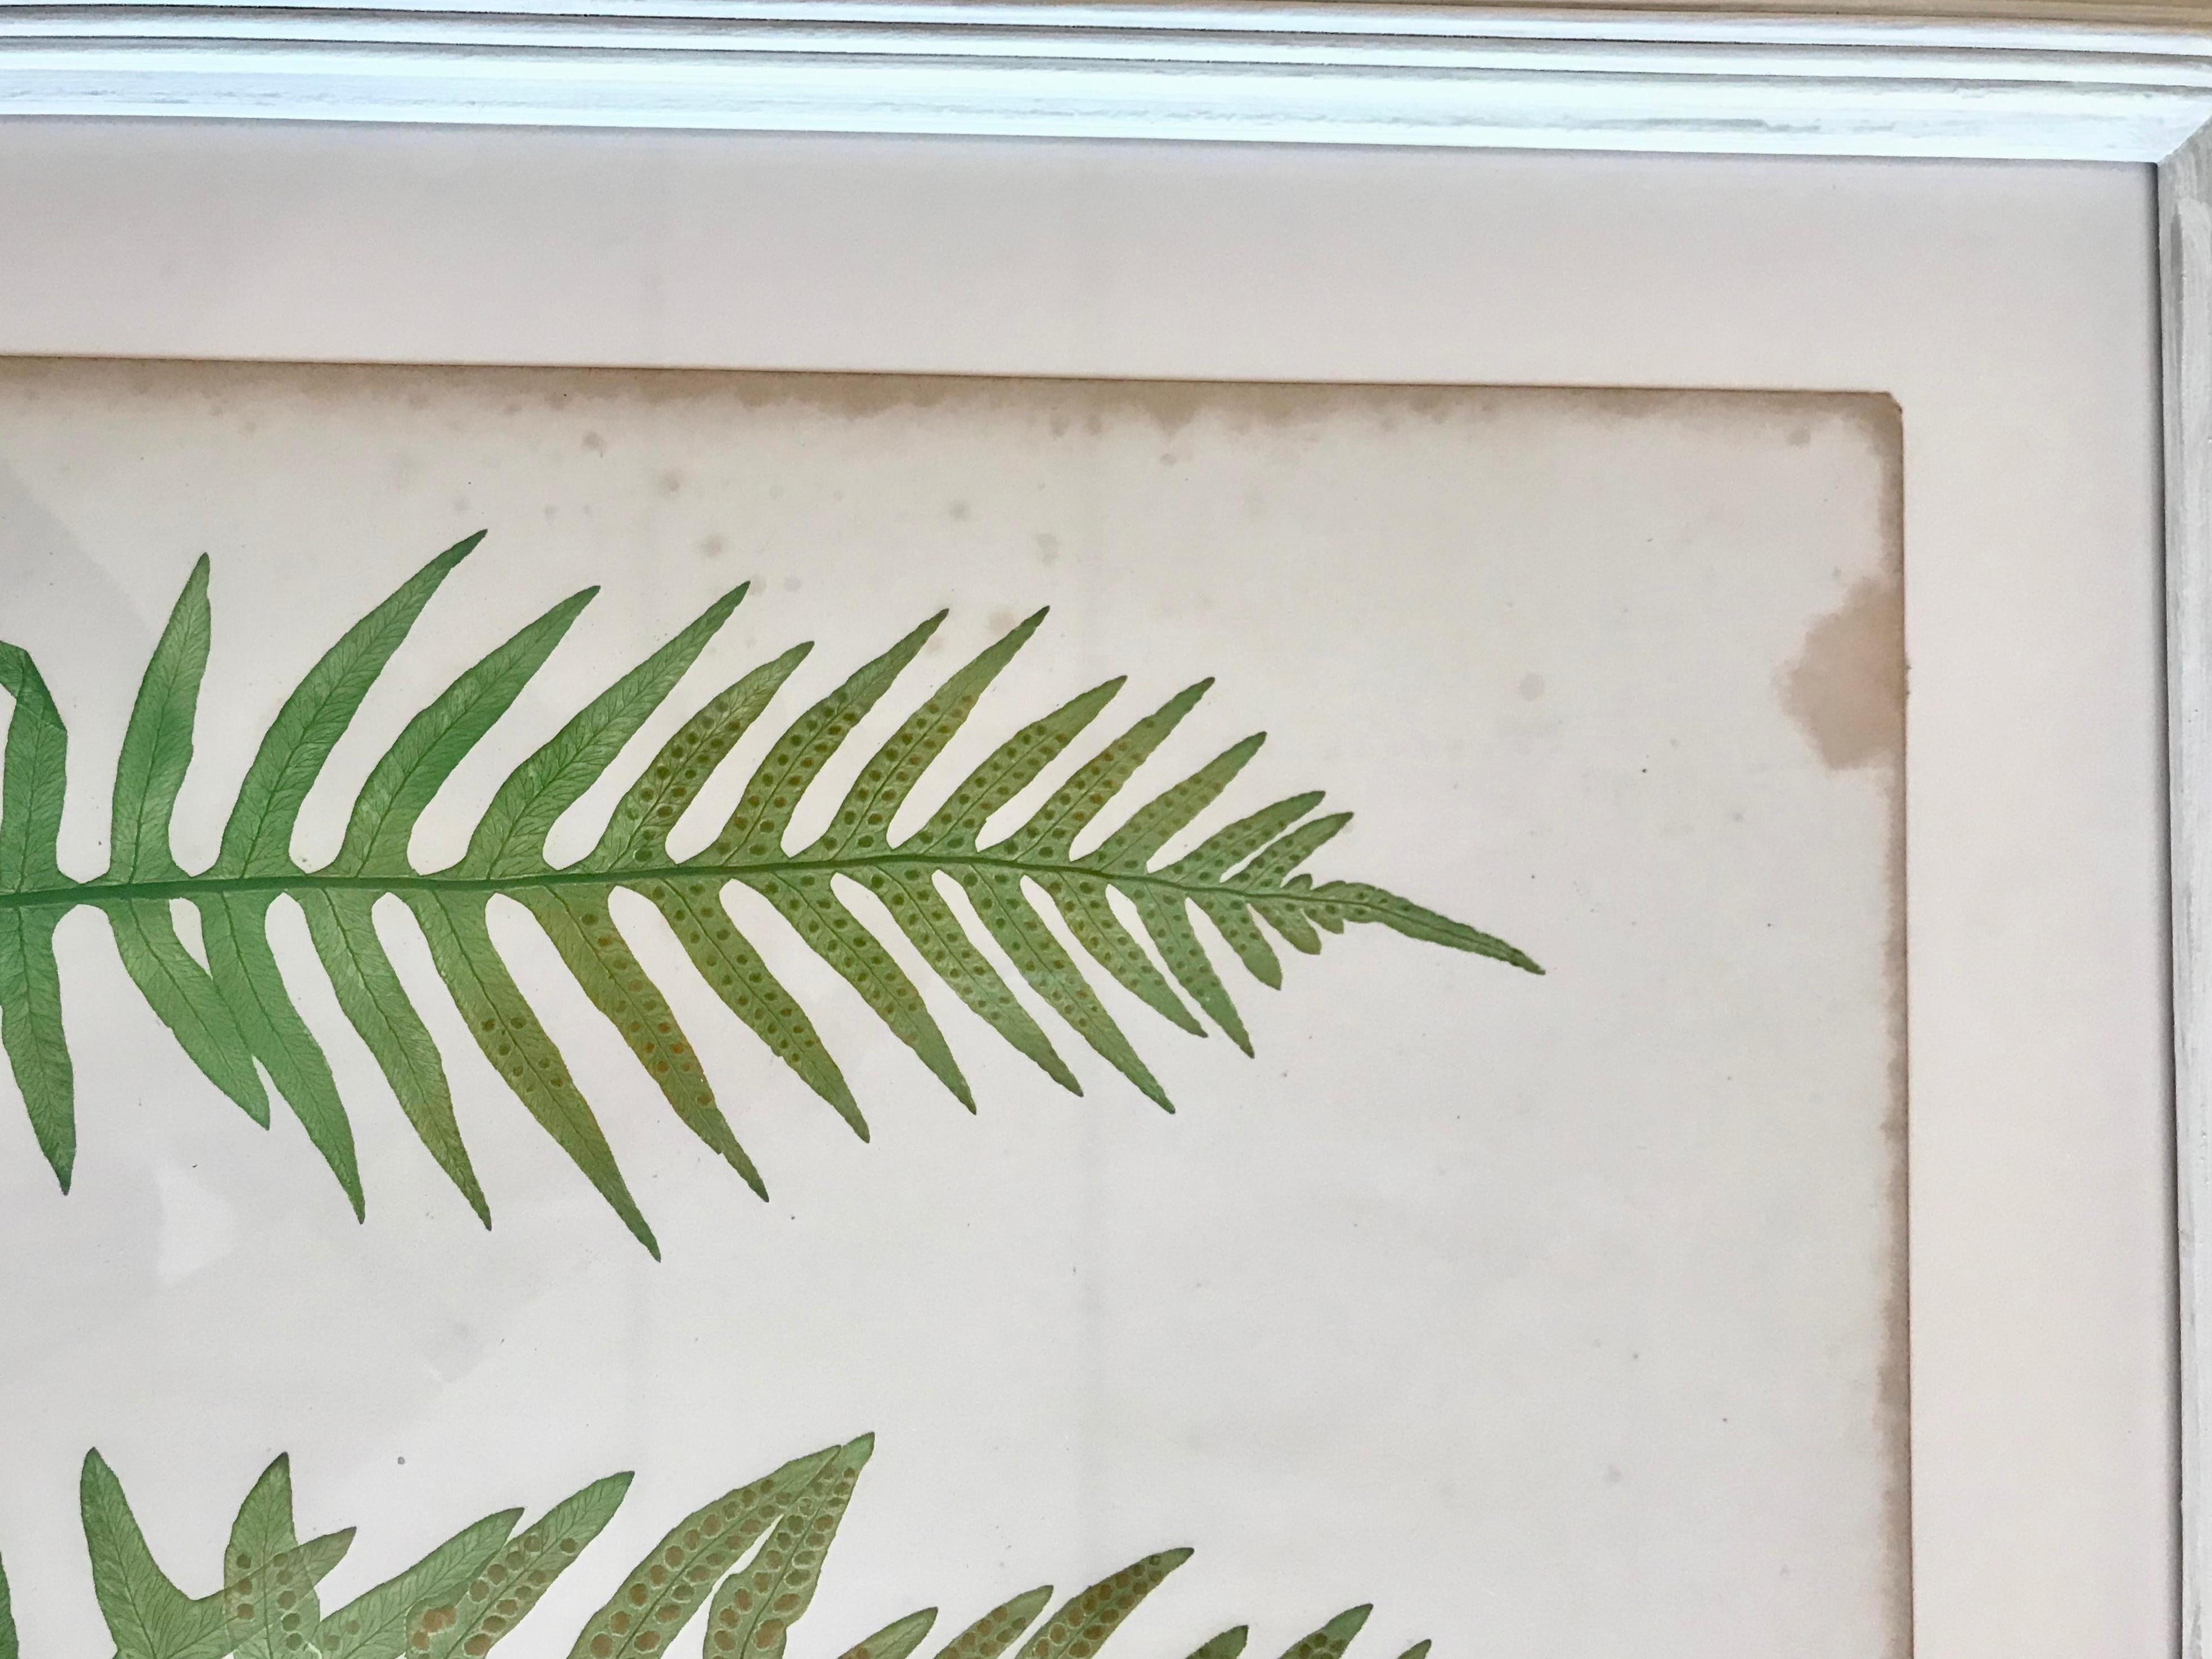 Rare process involving live specimens pressed into printing plates, circa 1855. Custom framing with conservation glass.

Plate 1.